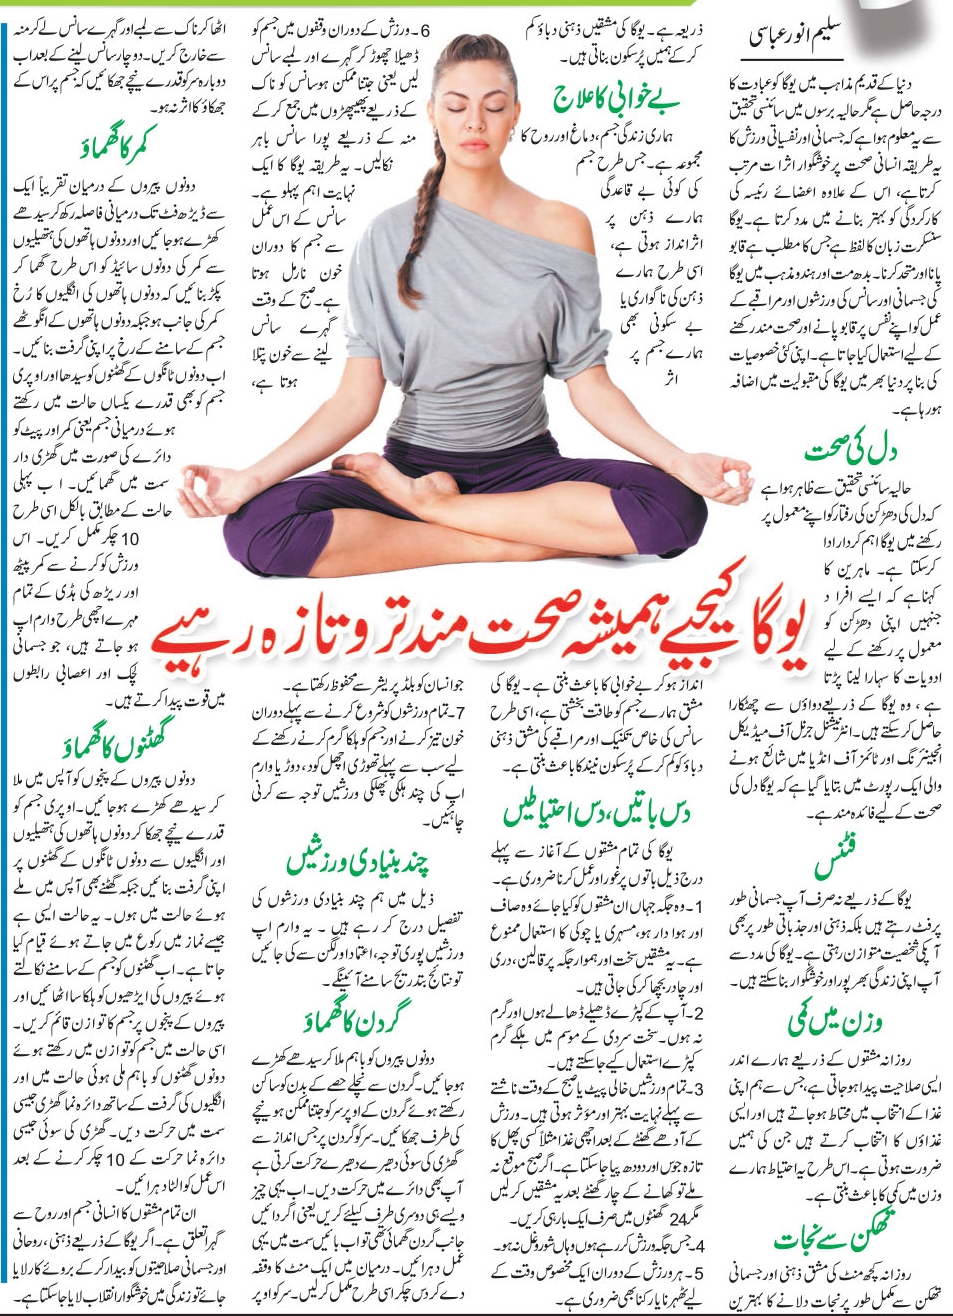 Yoga Guide in Urdu & English-Health Tips, Benefits & Exercises